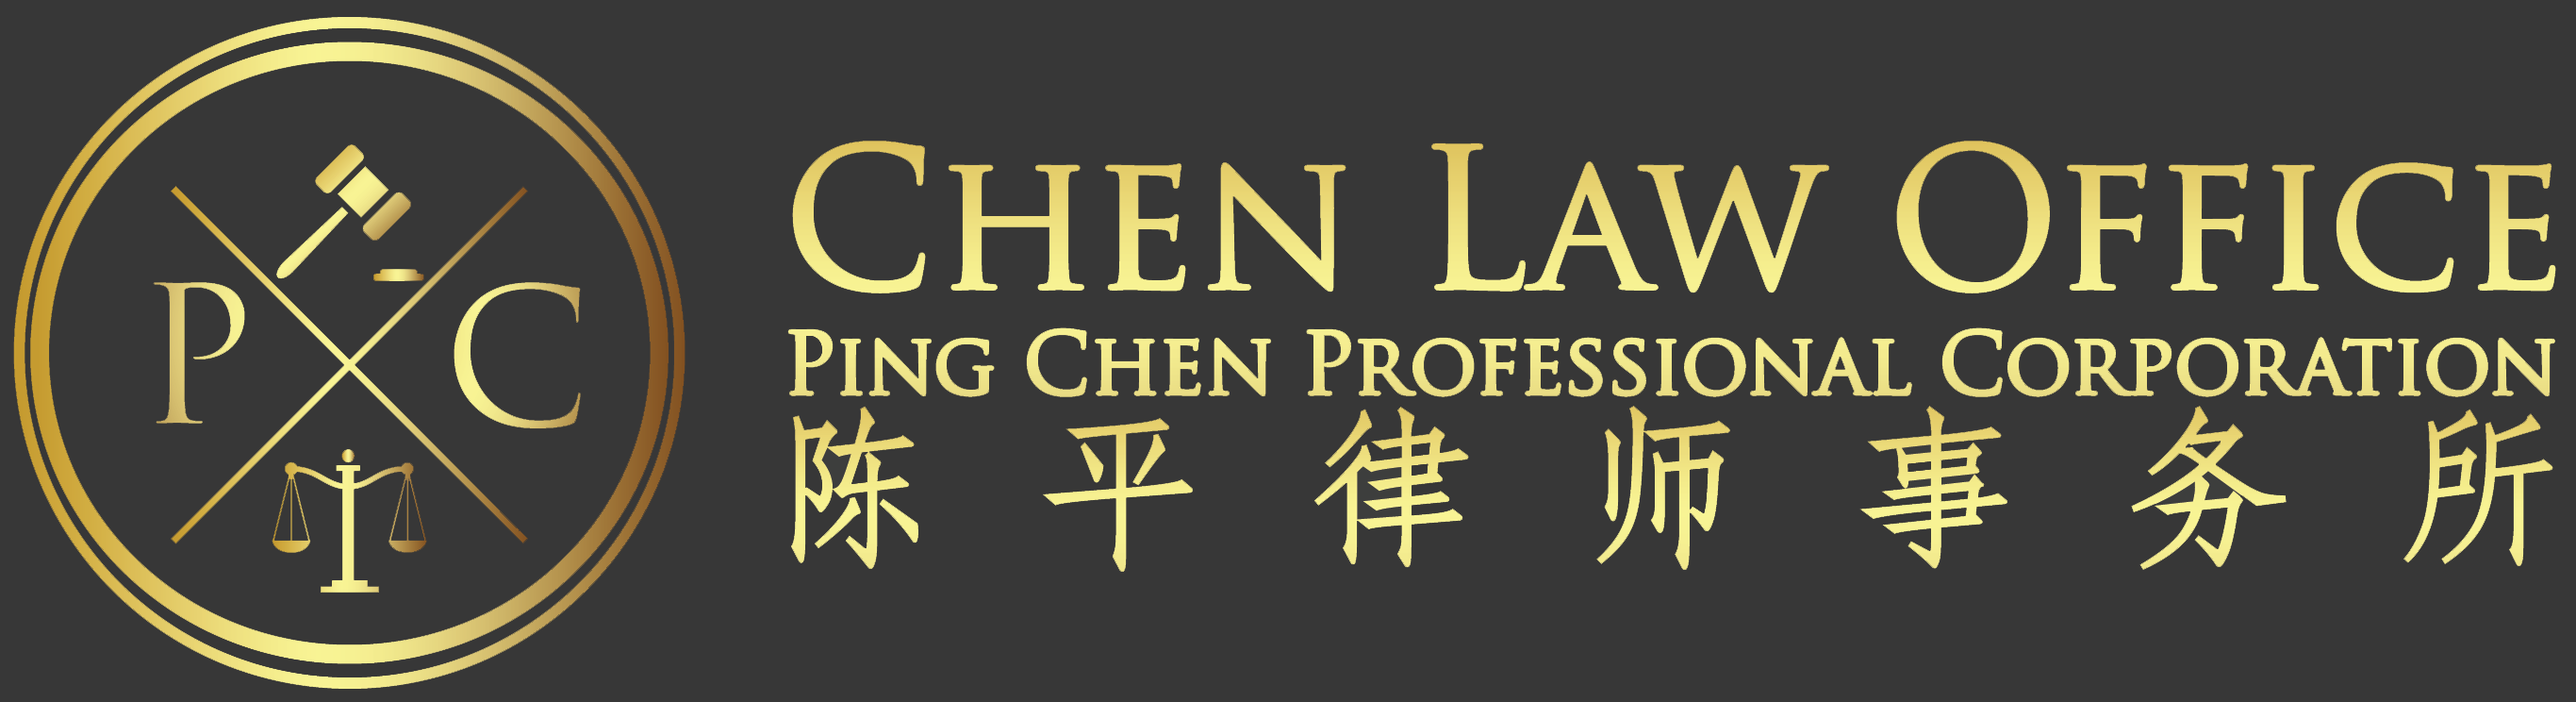 pingchen-logo.png